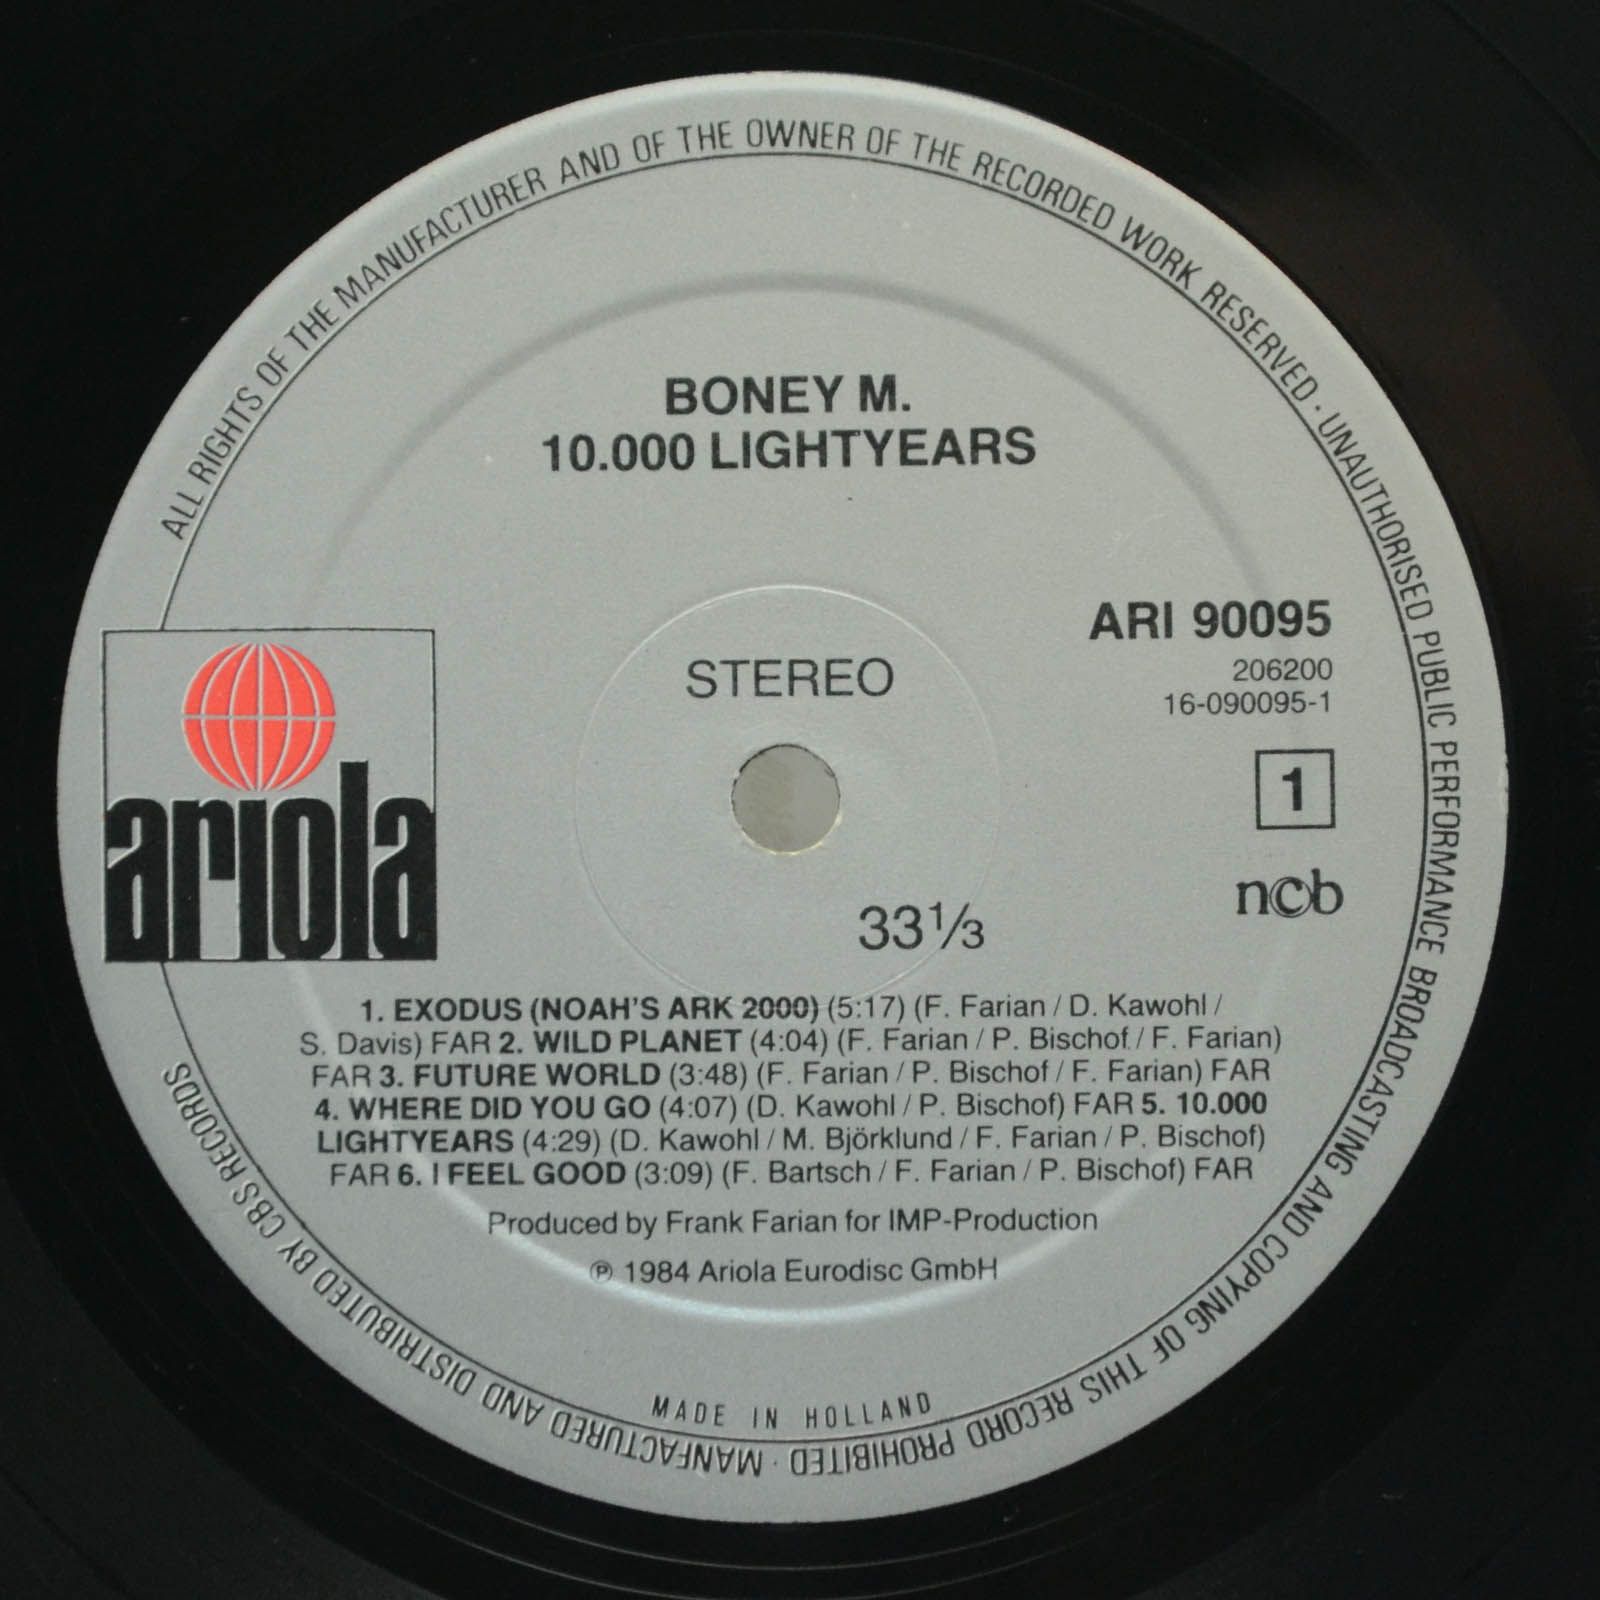 Boney M. — Ten Thousand Lightyears, 1984